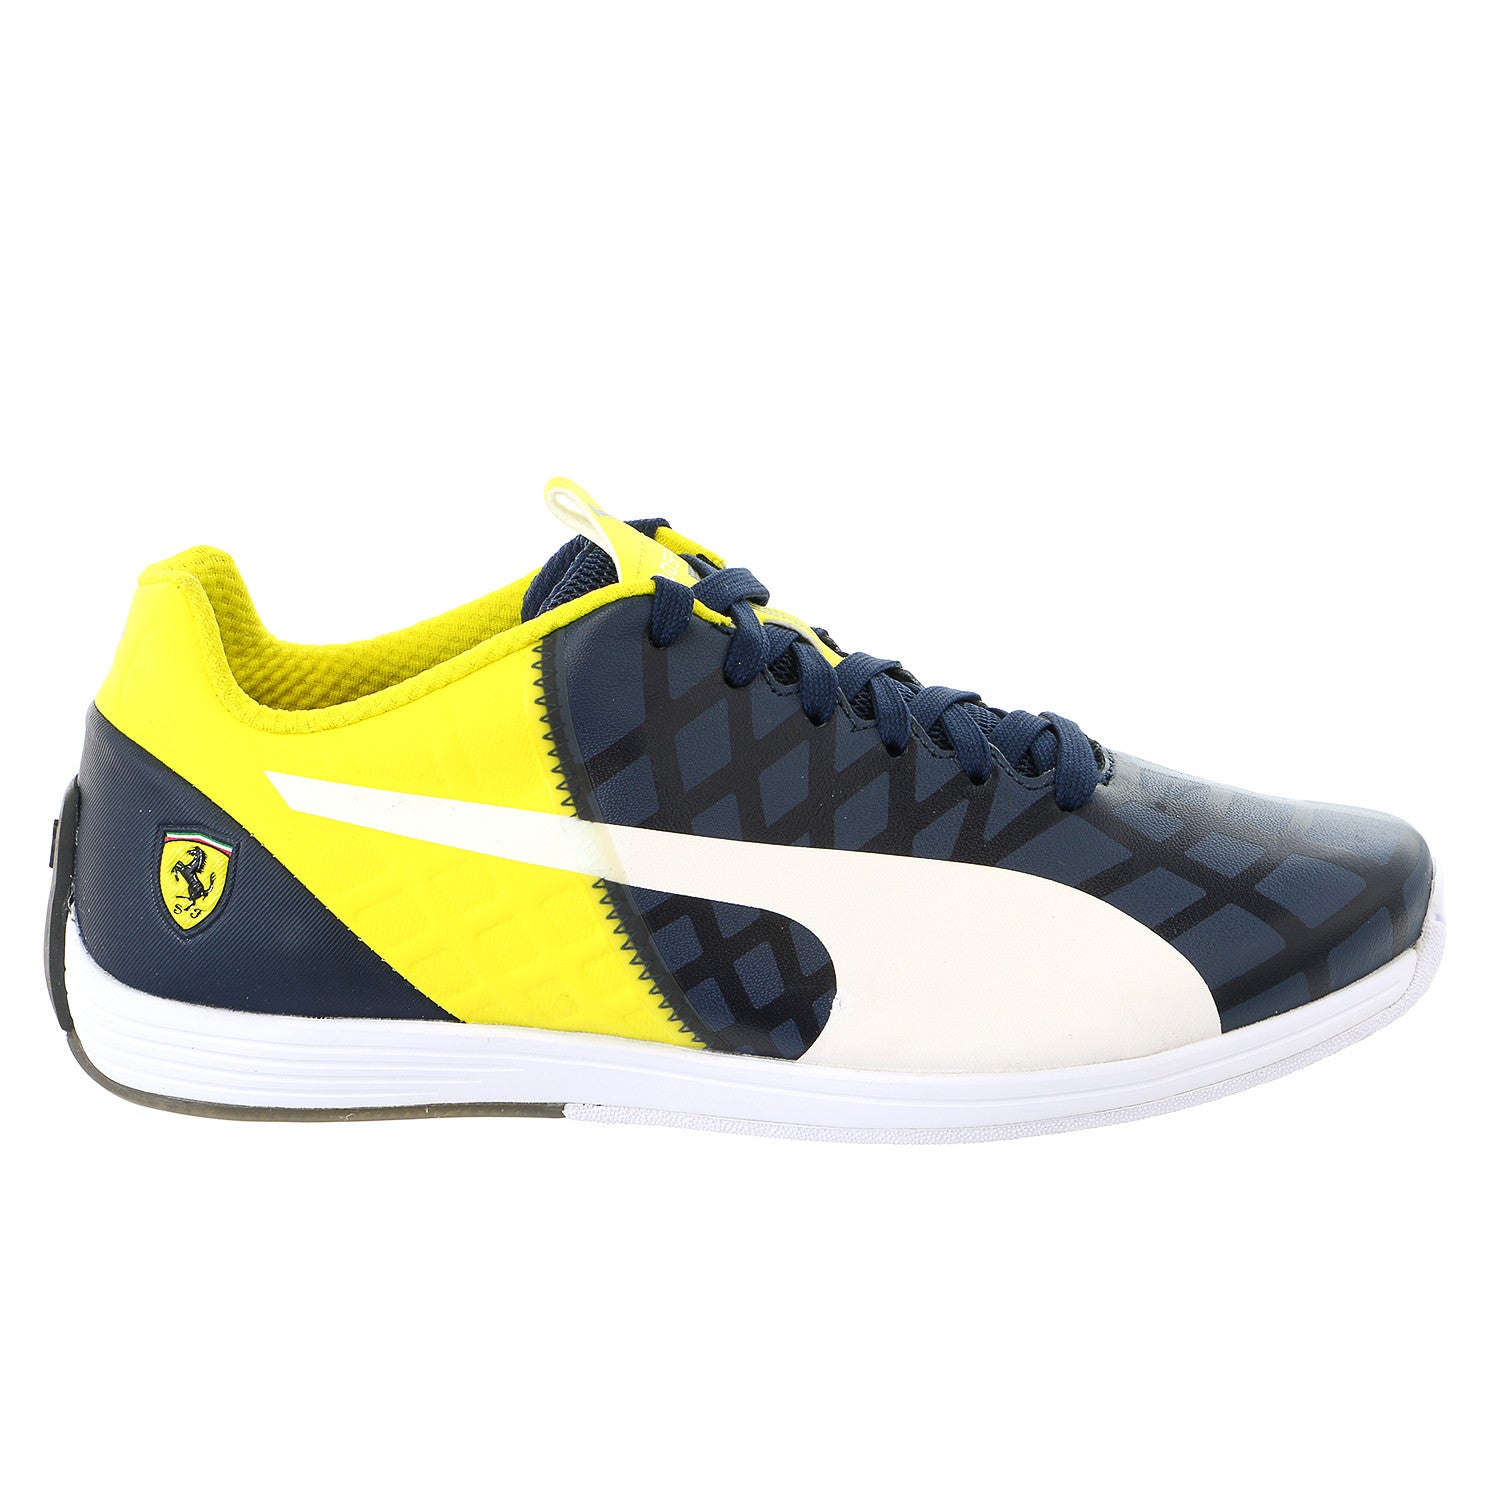 Puma Evospeed 1.4 Scuderia Ferrari Fashion Sneaker - White/Black/ Shoplifestyle